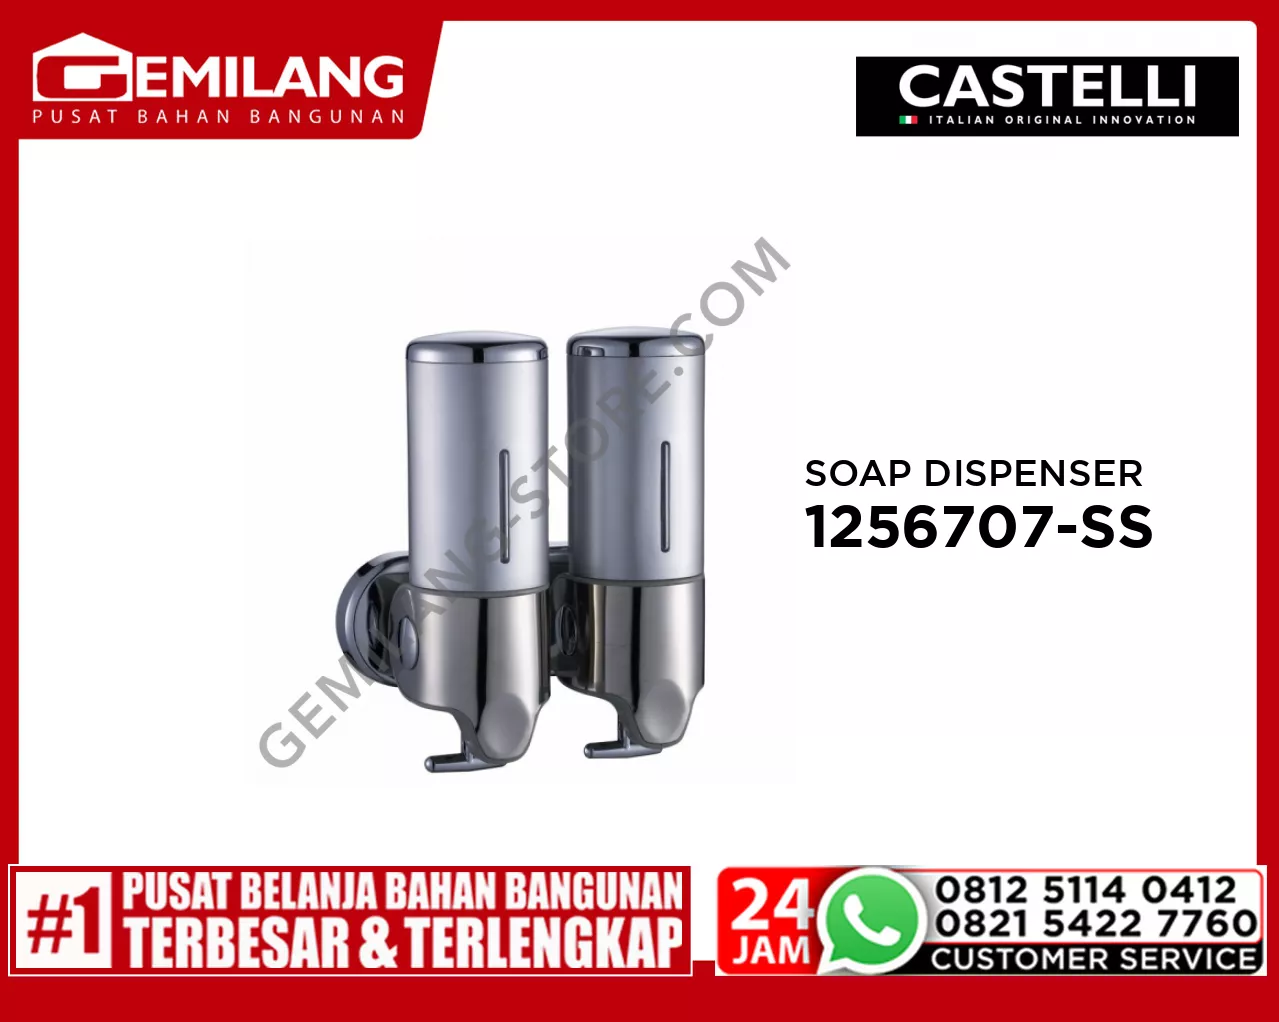 CASTELLI DOUBEL SOAP DISPENSER STAINLEES STEEL 1256707-SS